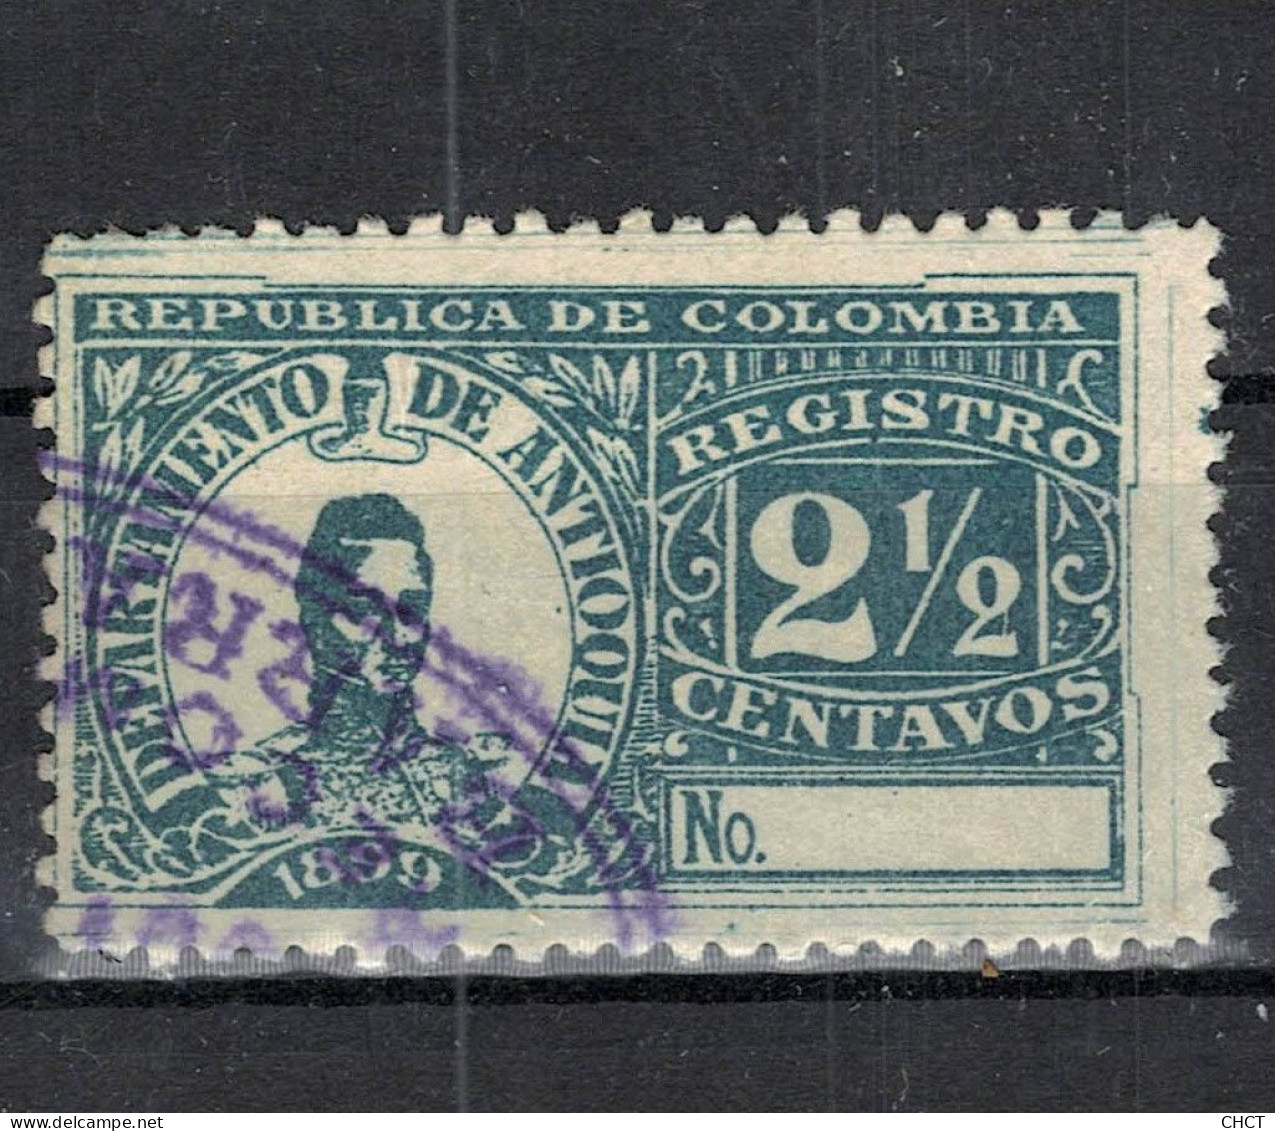 CHCT85 - Registro 2 1/2 Centavos, Used, 1899, Department Of Antioquia, Colombia - Kolumbien